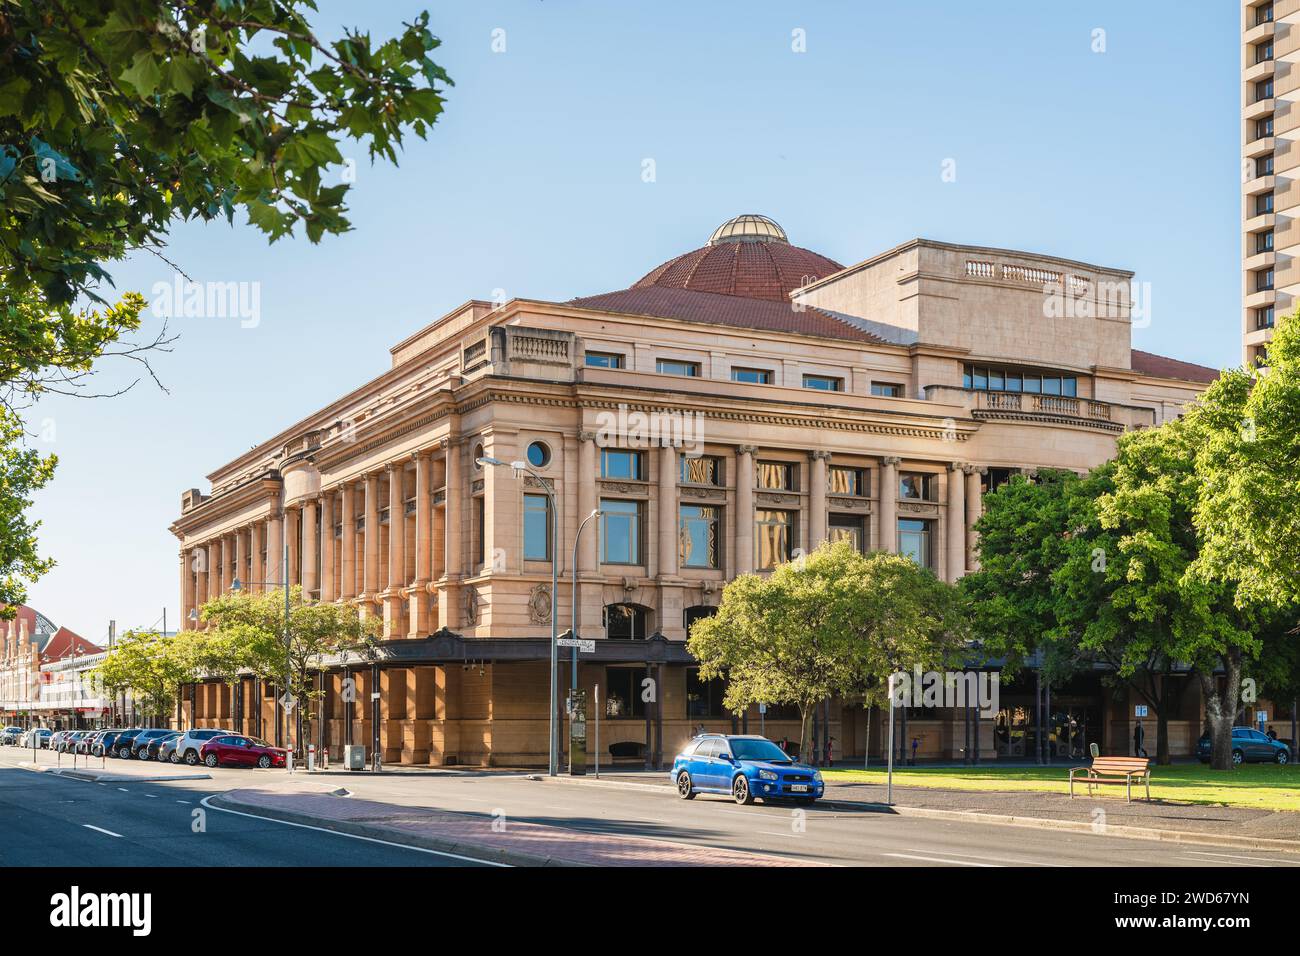 Adelaide, Australien - 19. Dezember 2020: Sir Samuel Way Courts Building als Hauptsitz des District Court of South Australia am Victoria Square V. Stockfoto